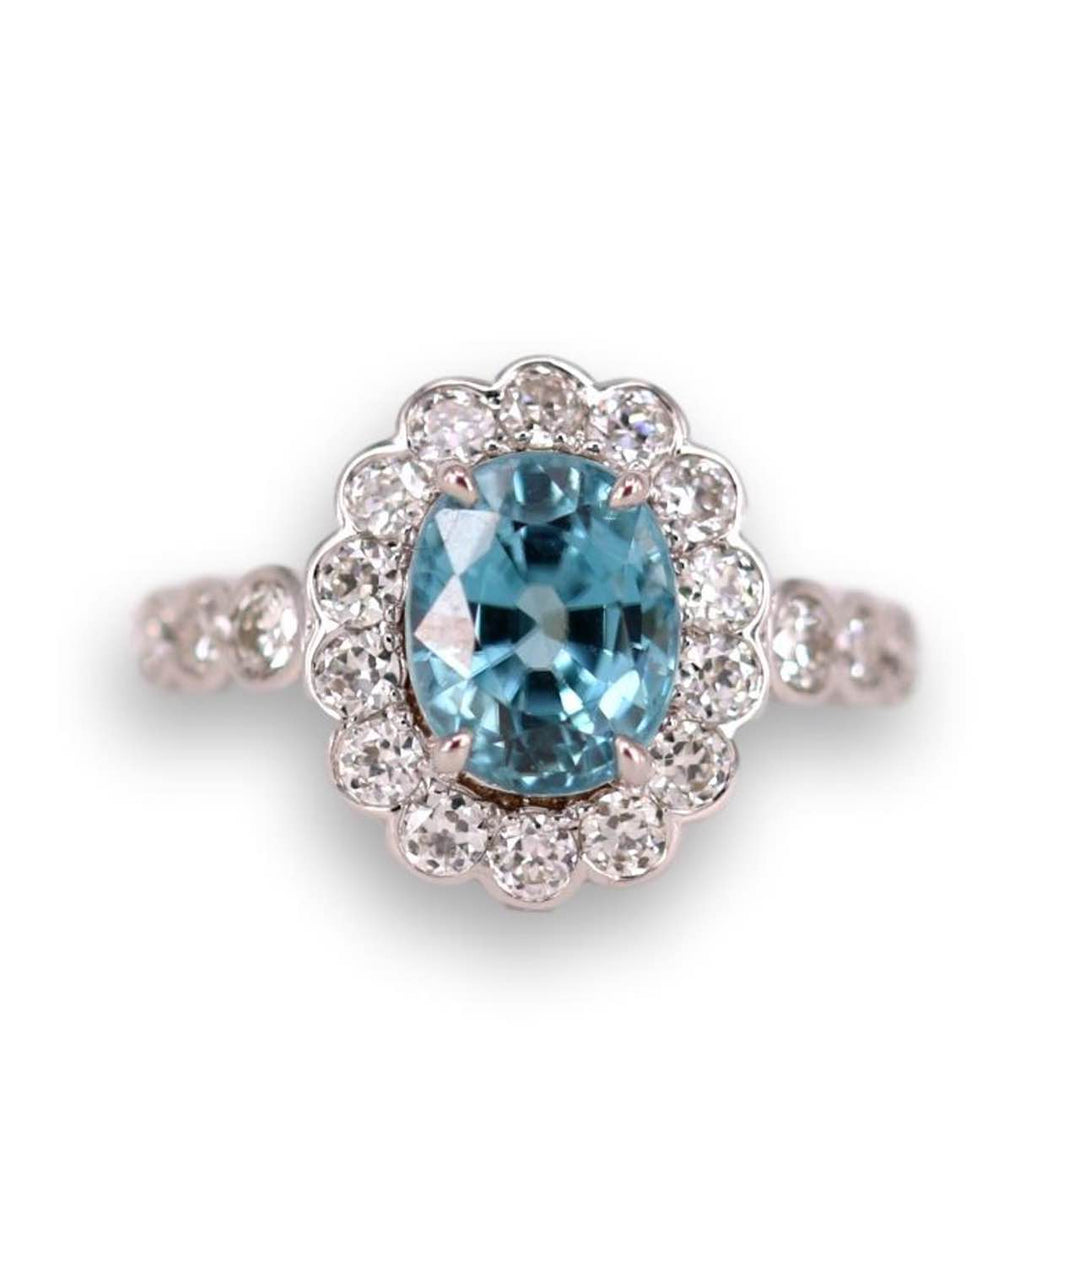 Blue zircon and diamond cluster ring